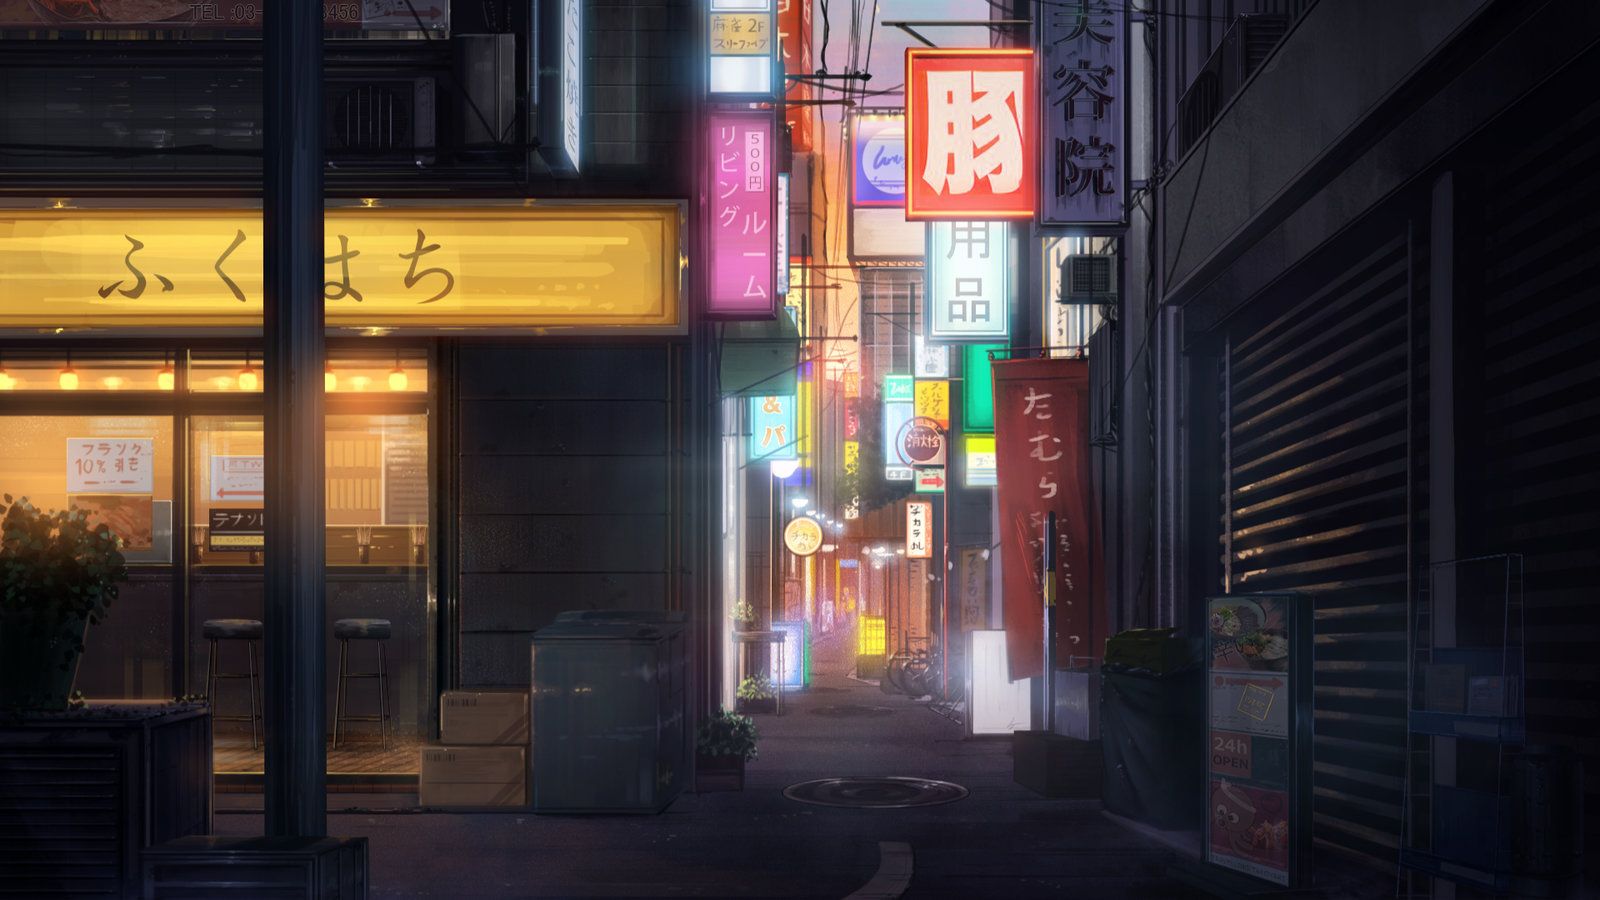 Anime Alleyway Wallpapers